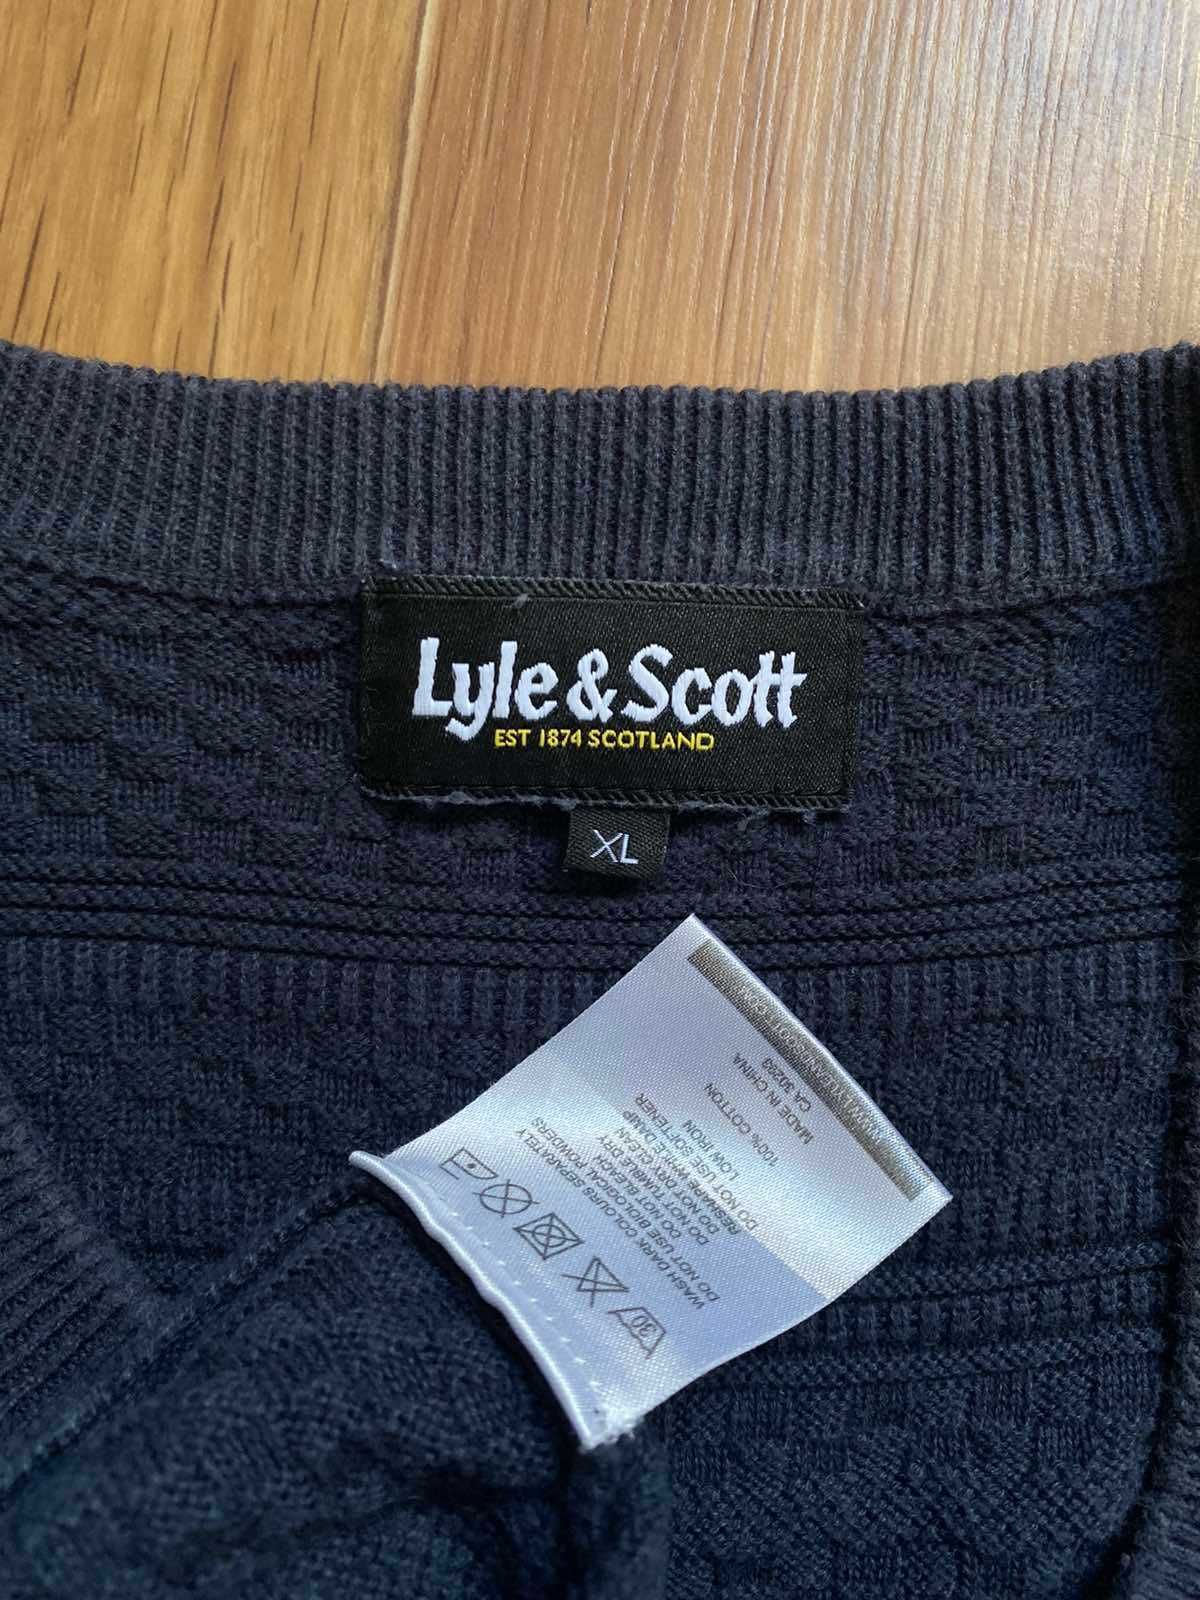 Lyle Scott - кофта свитер пуловер мужской высокий рост размер XL-XXL